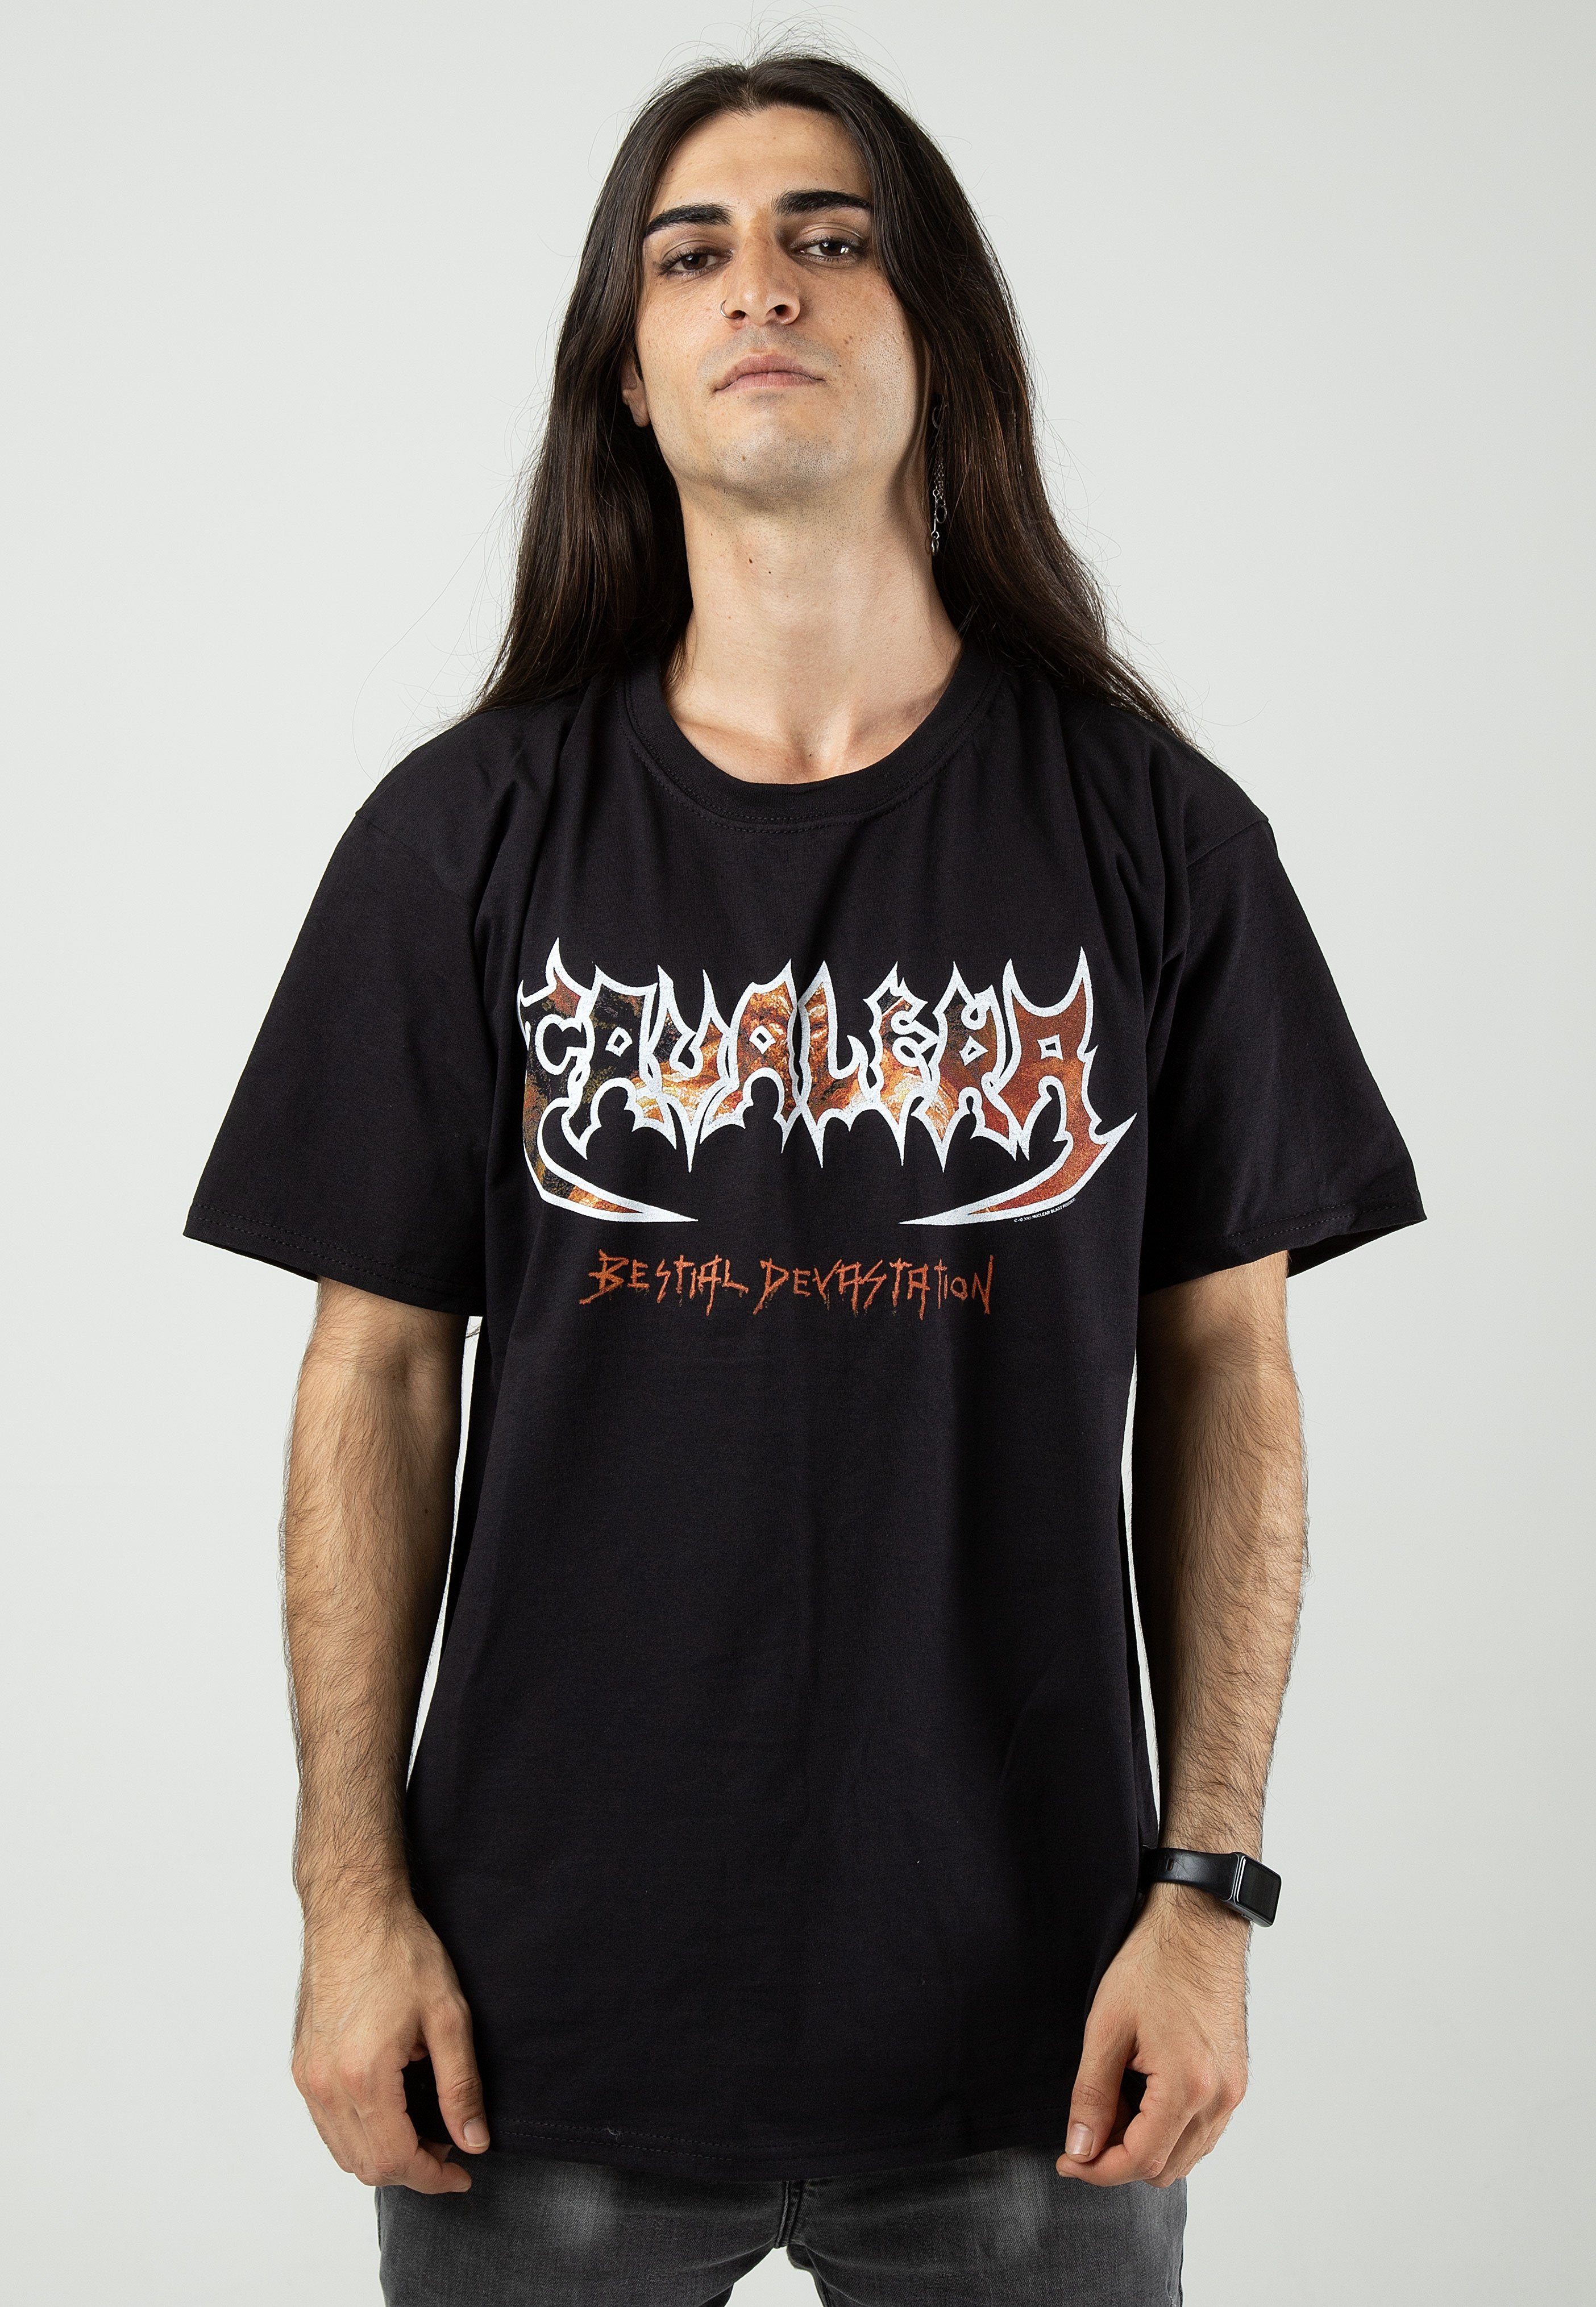 Cavalera - Bestial Devastation - T-Shirt